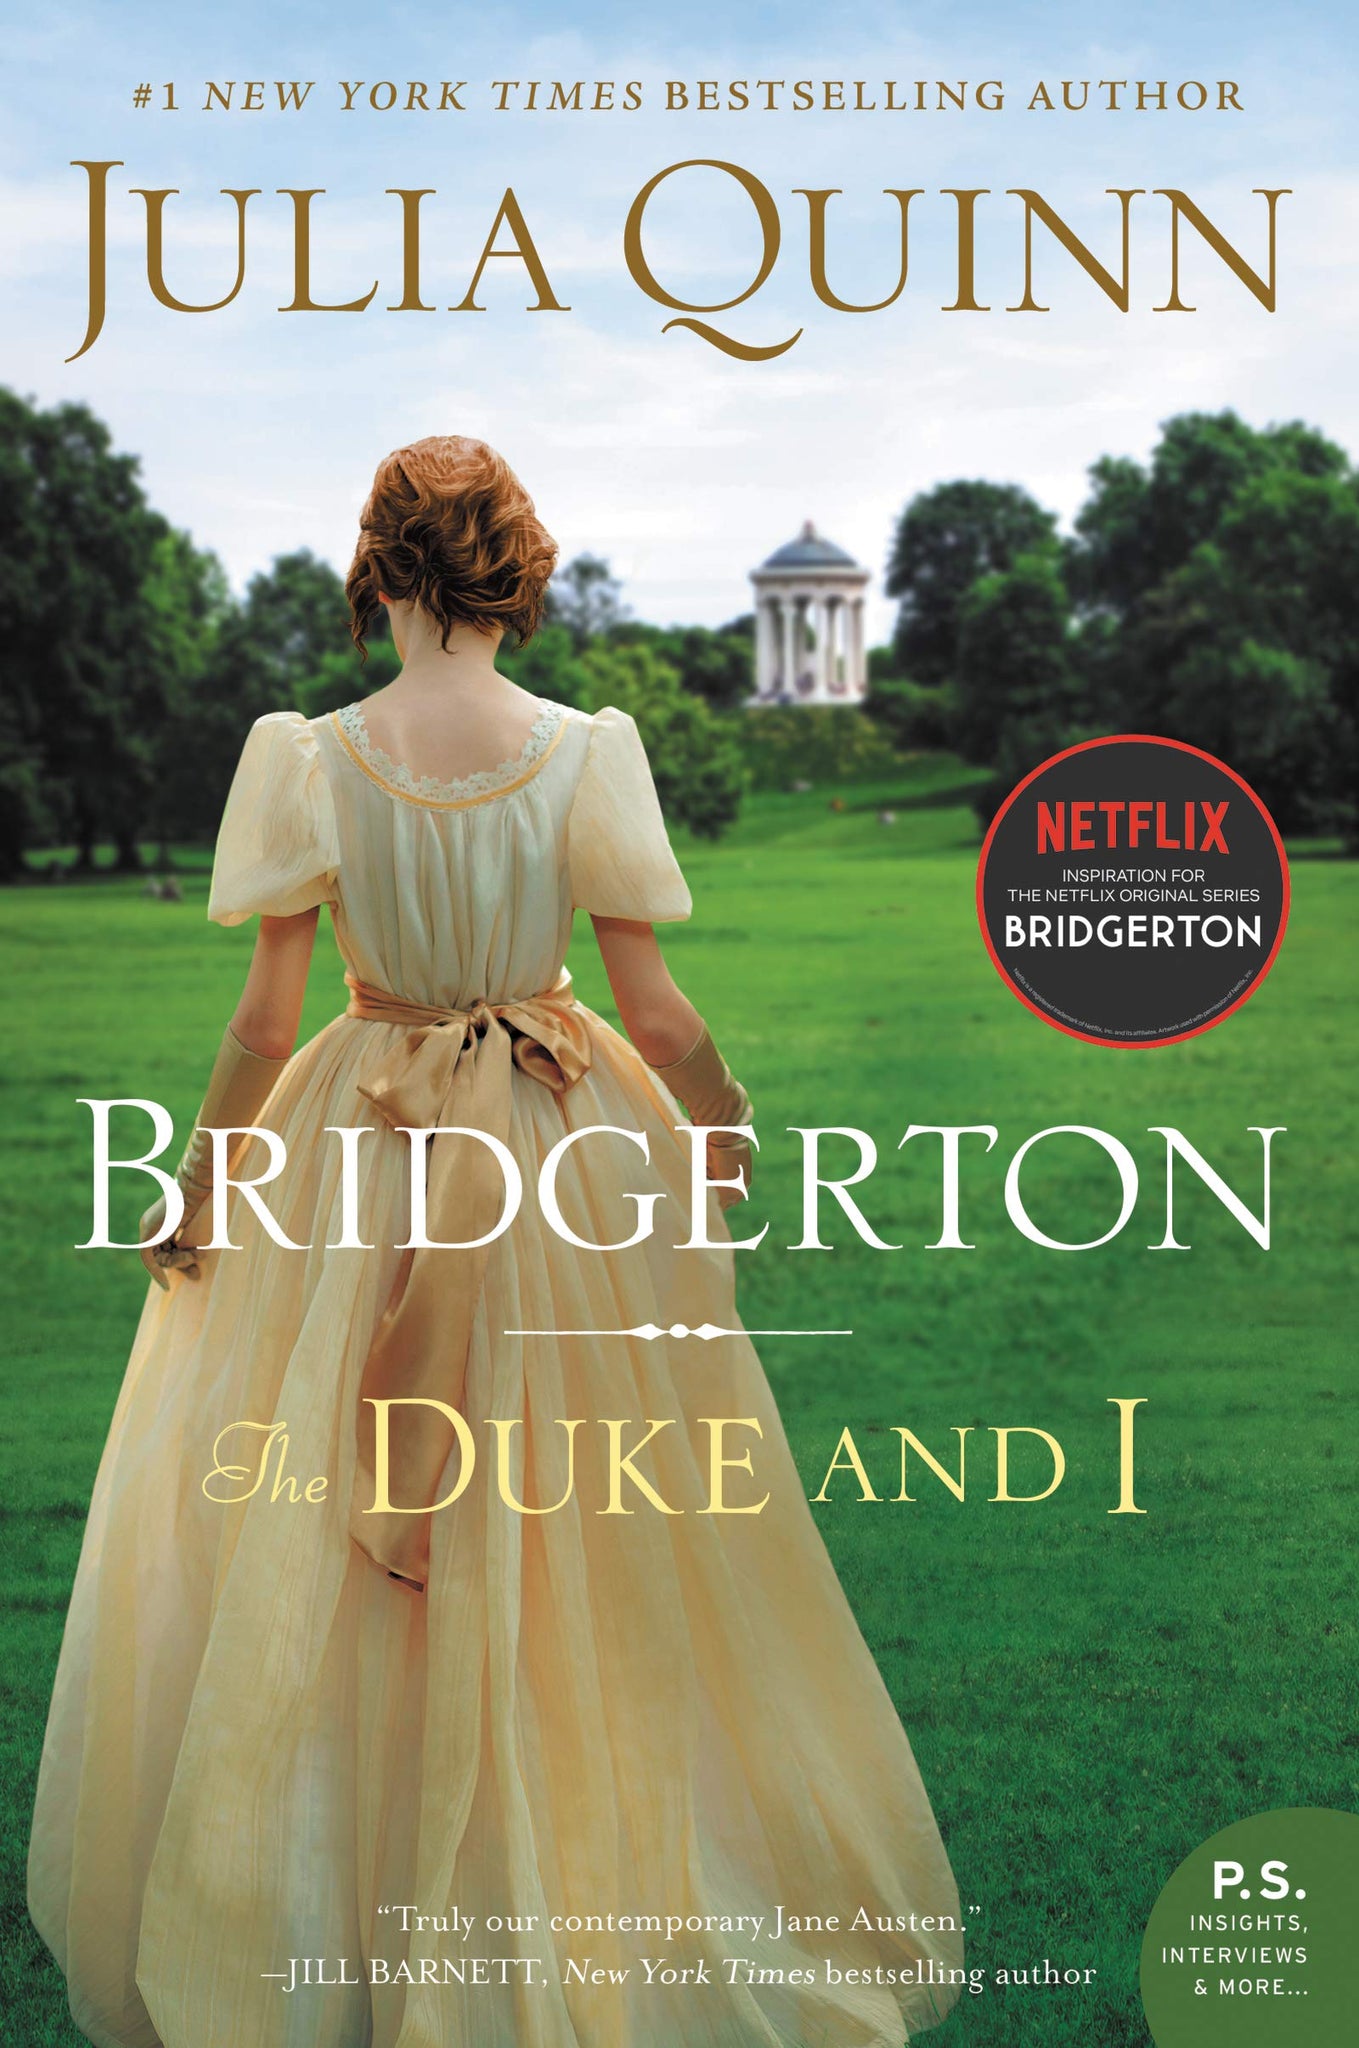 The Duke & I: Bridgerton by Julia Quinn